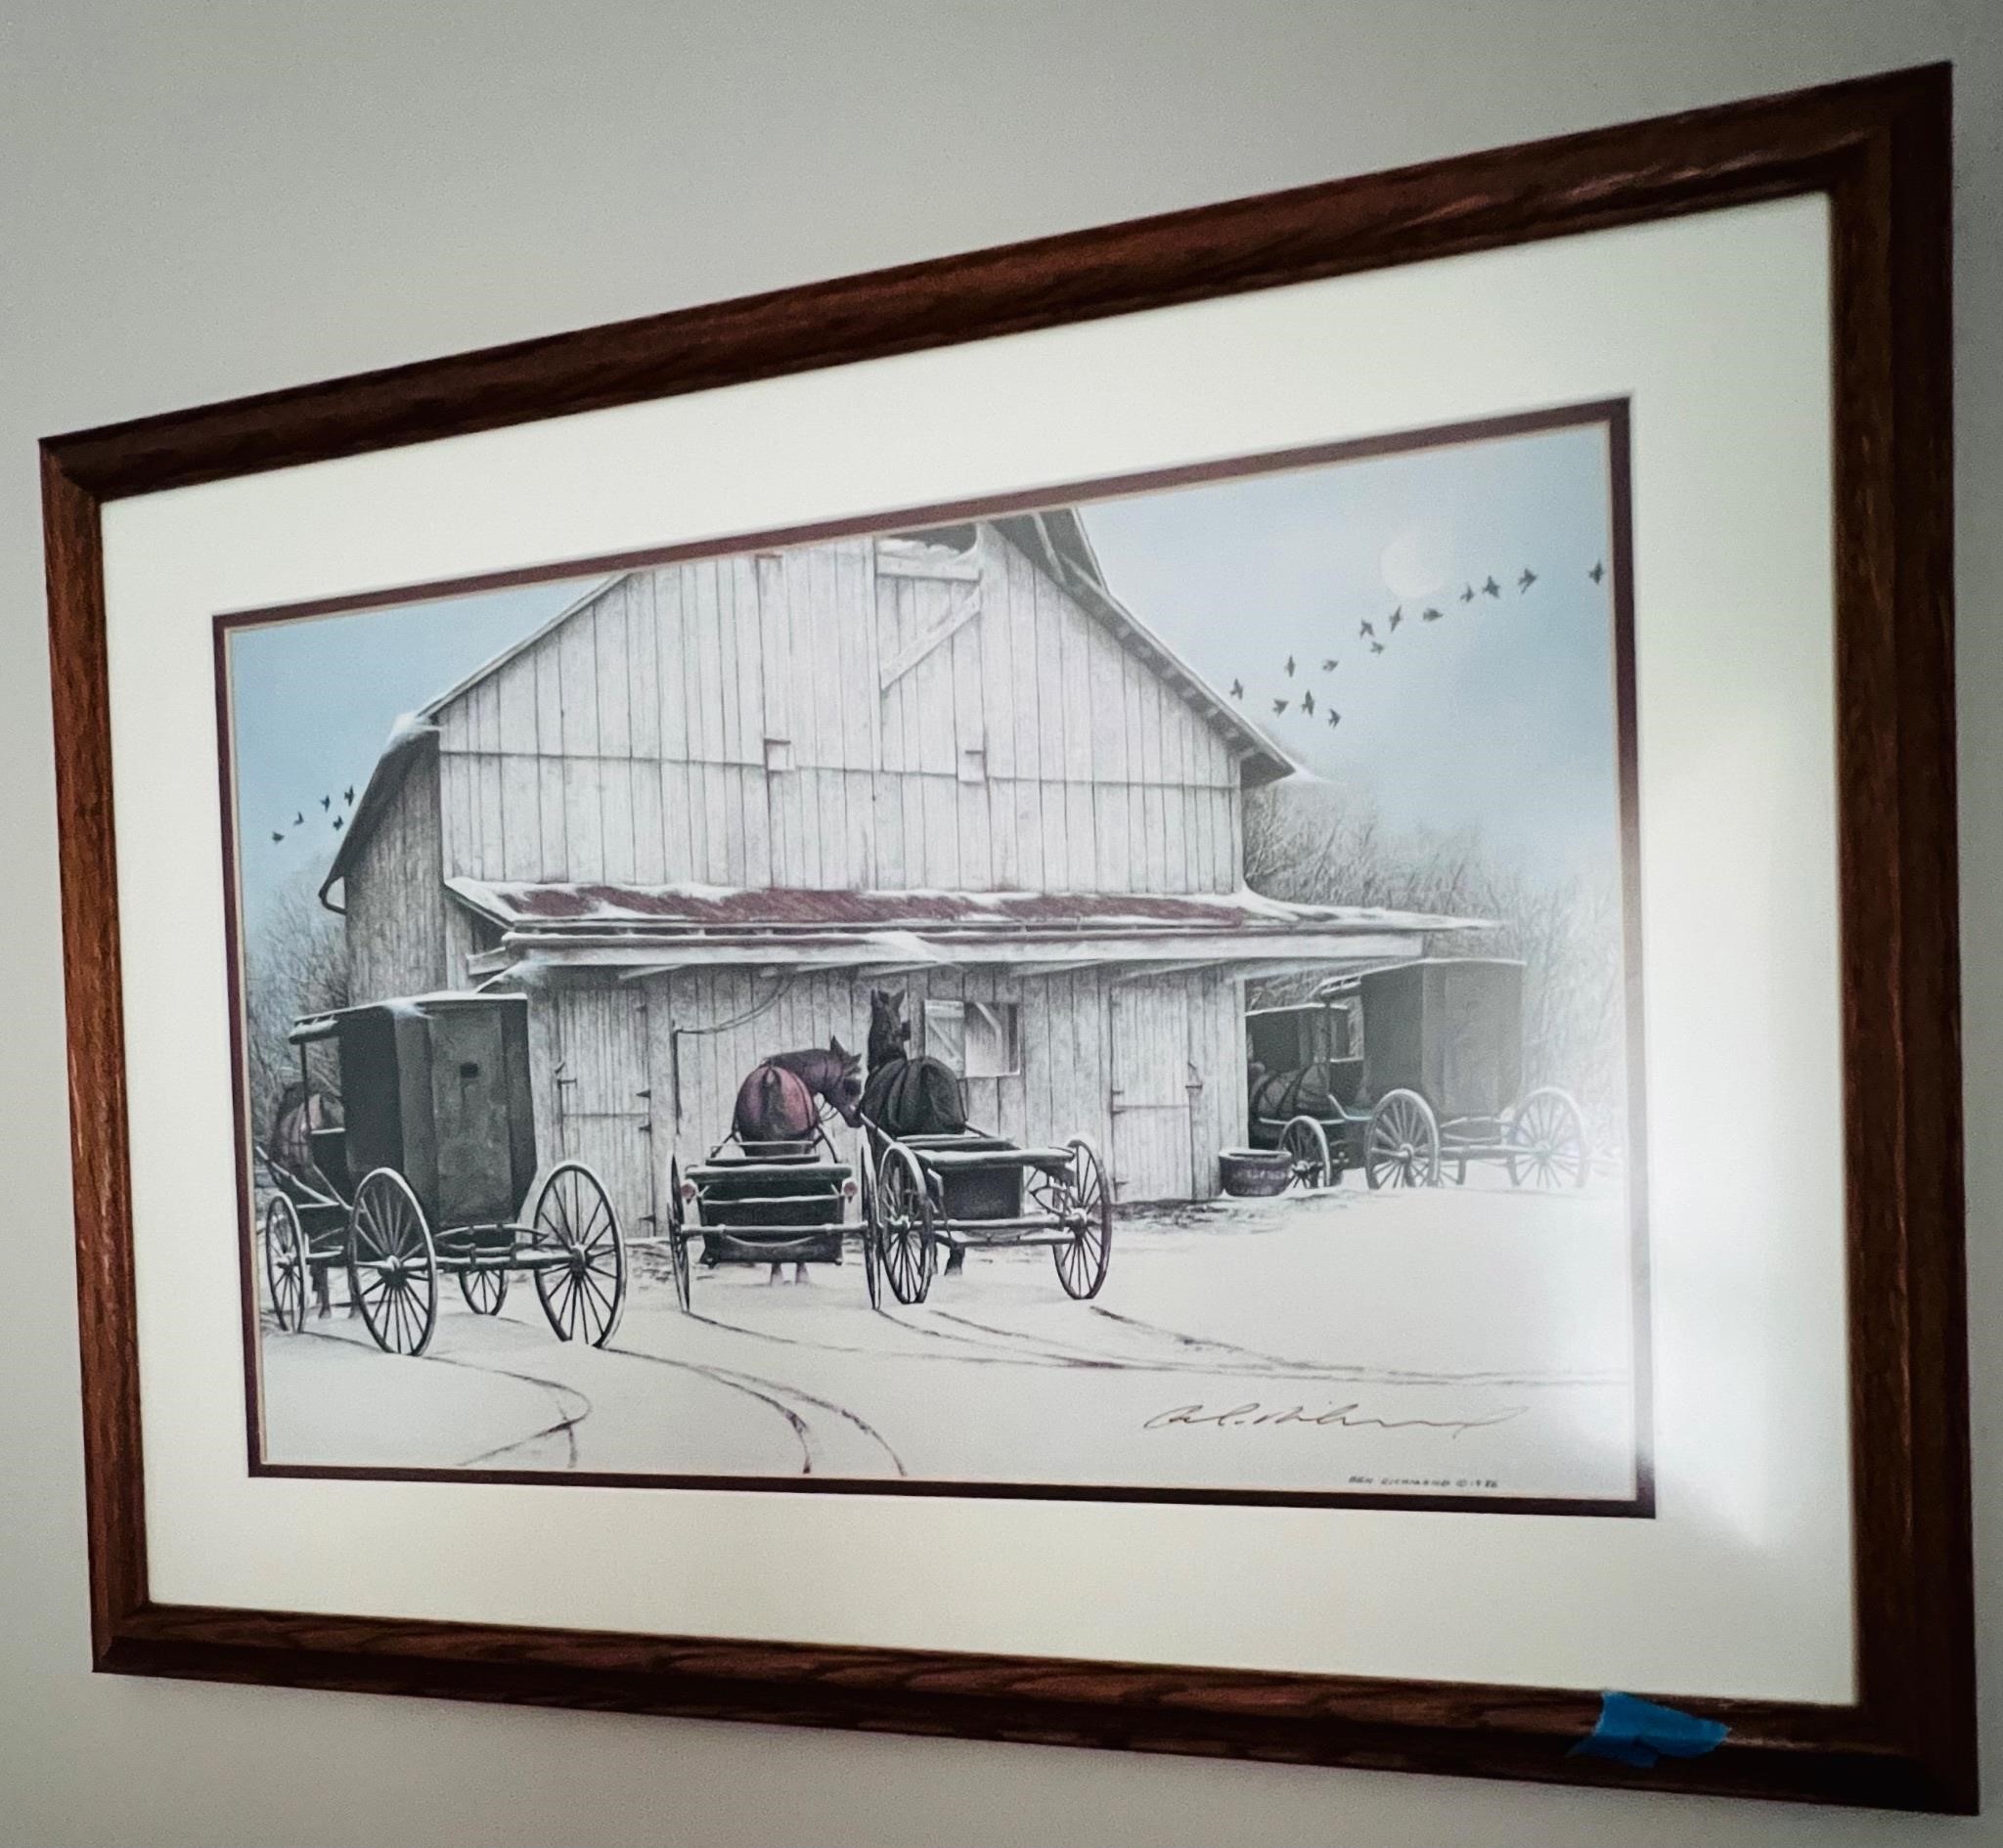 Amish Horse & Buggy & Barn By Ben Richmond Print